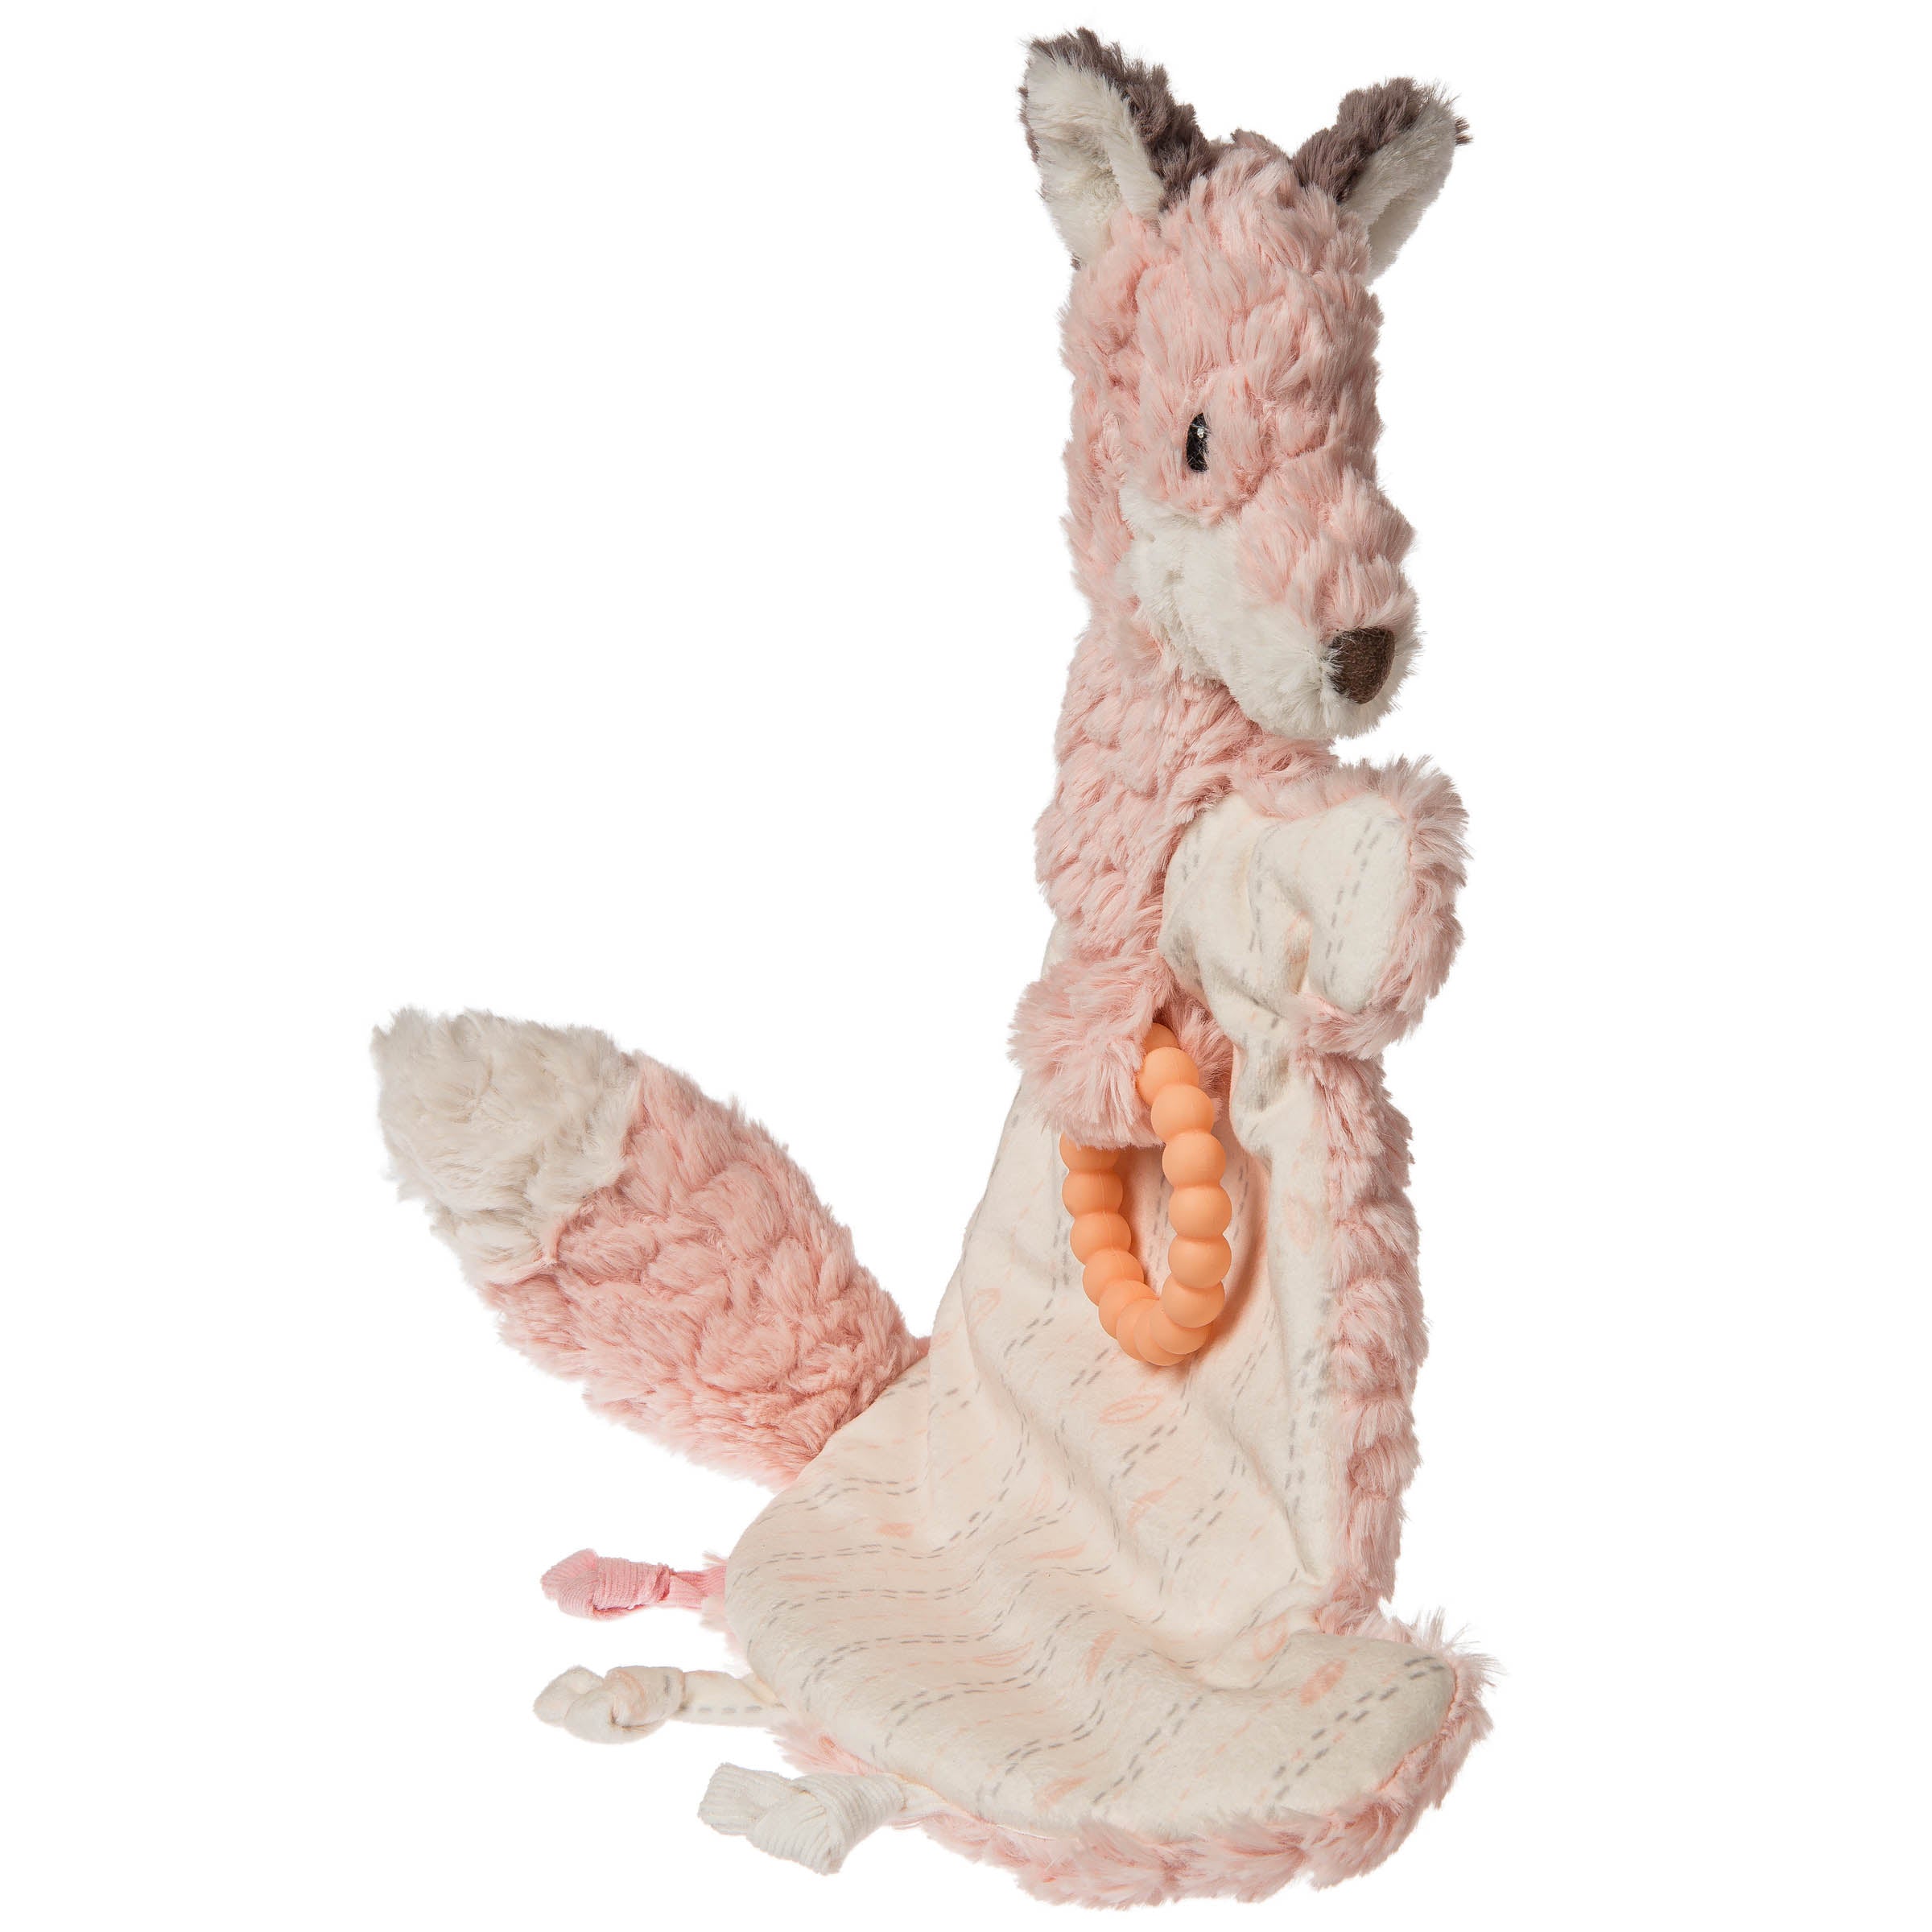 Snuggy Nuggles Fox Blanket - Twinkle Twinkle Little One